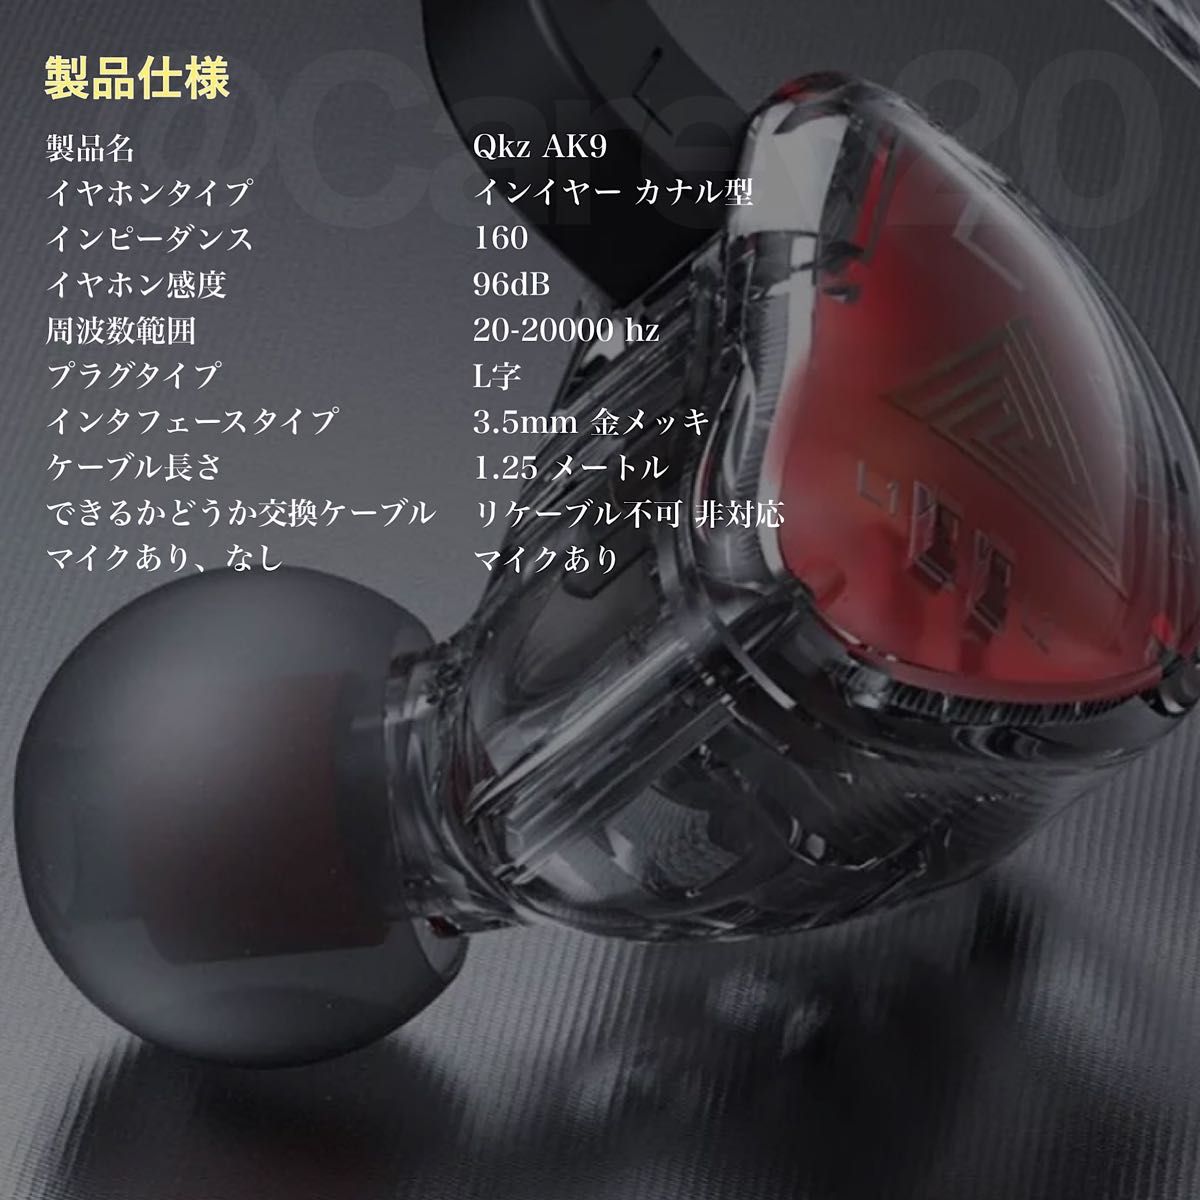 Qkz ak9 ブラック 有線イヤホン 3.5mm ゲーミングイヤホン ステレオ マイク付き 音楽 スポーツ ヘッドセット